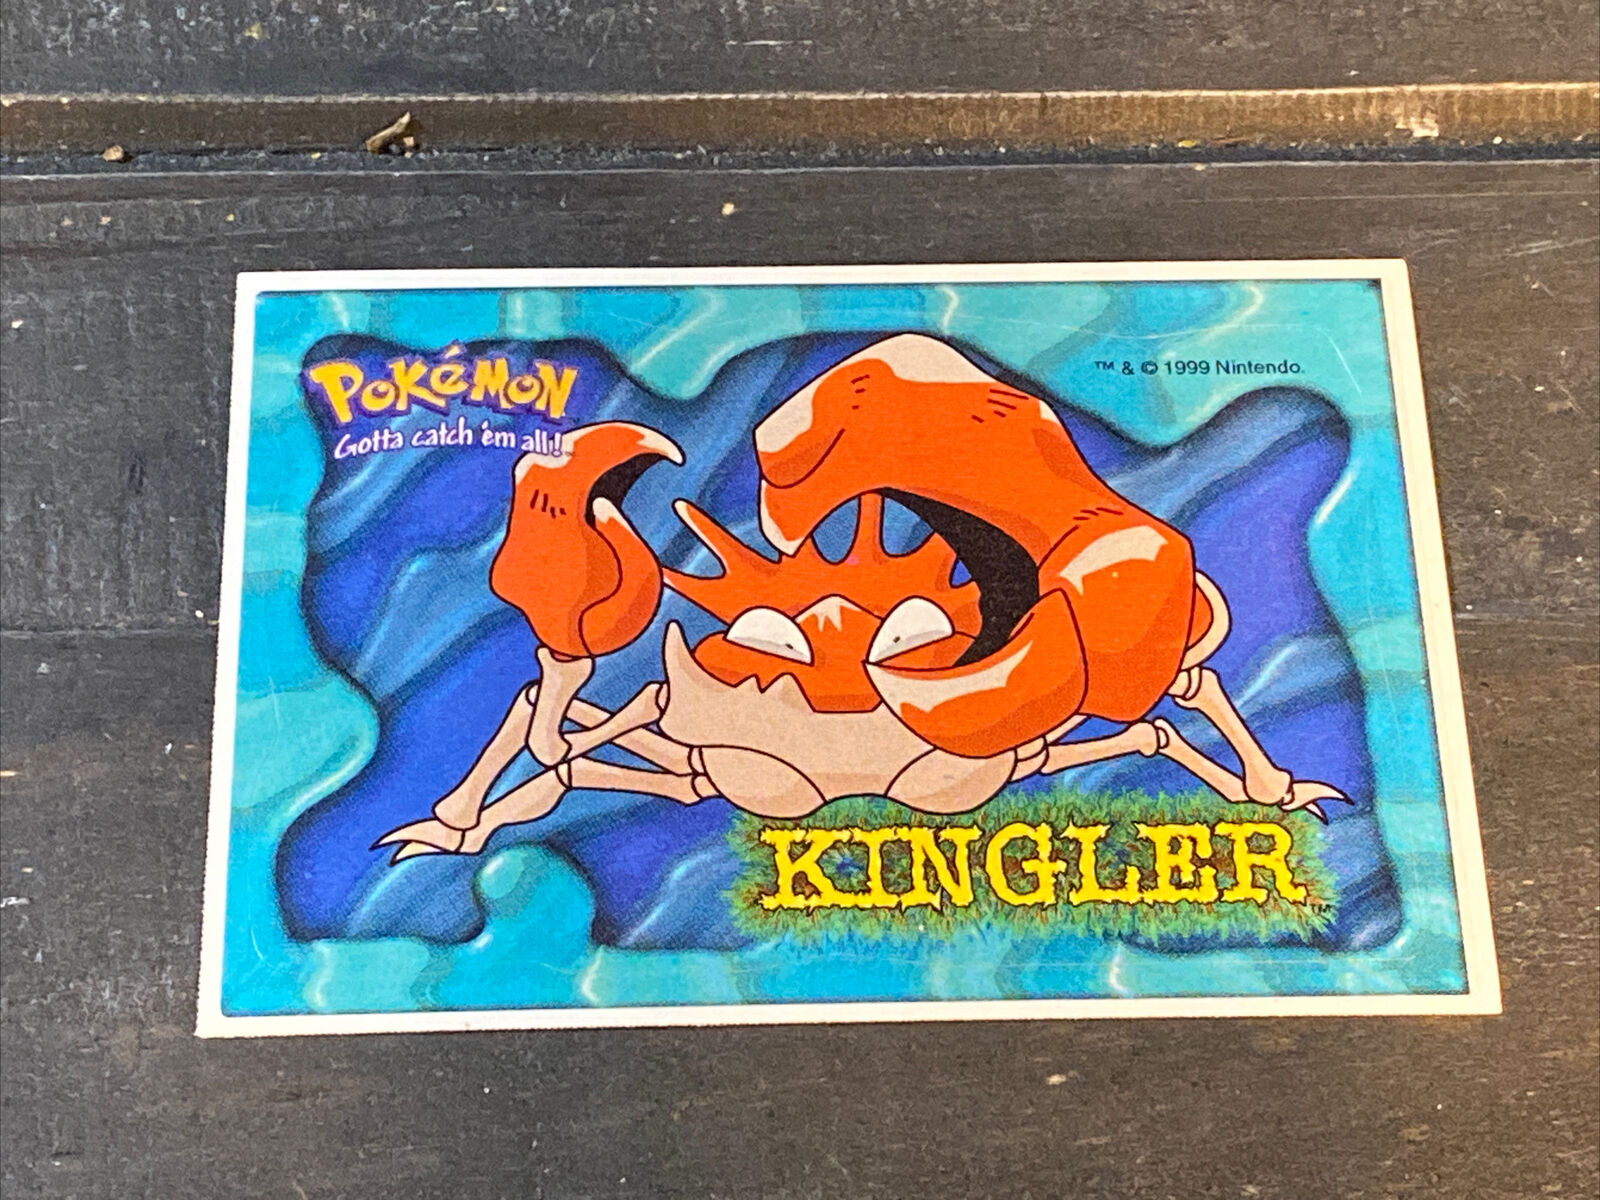 Vintage 1999 Pokémon Kingler Vending Machine Sticker Card A&A Made in USA